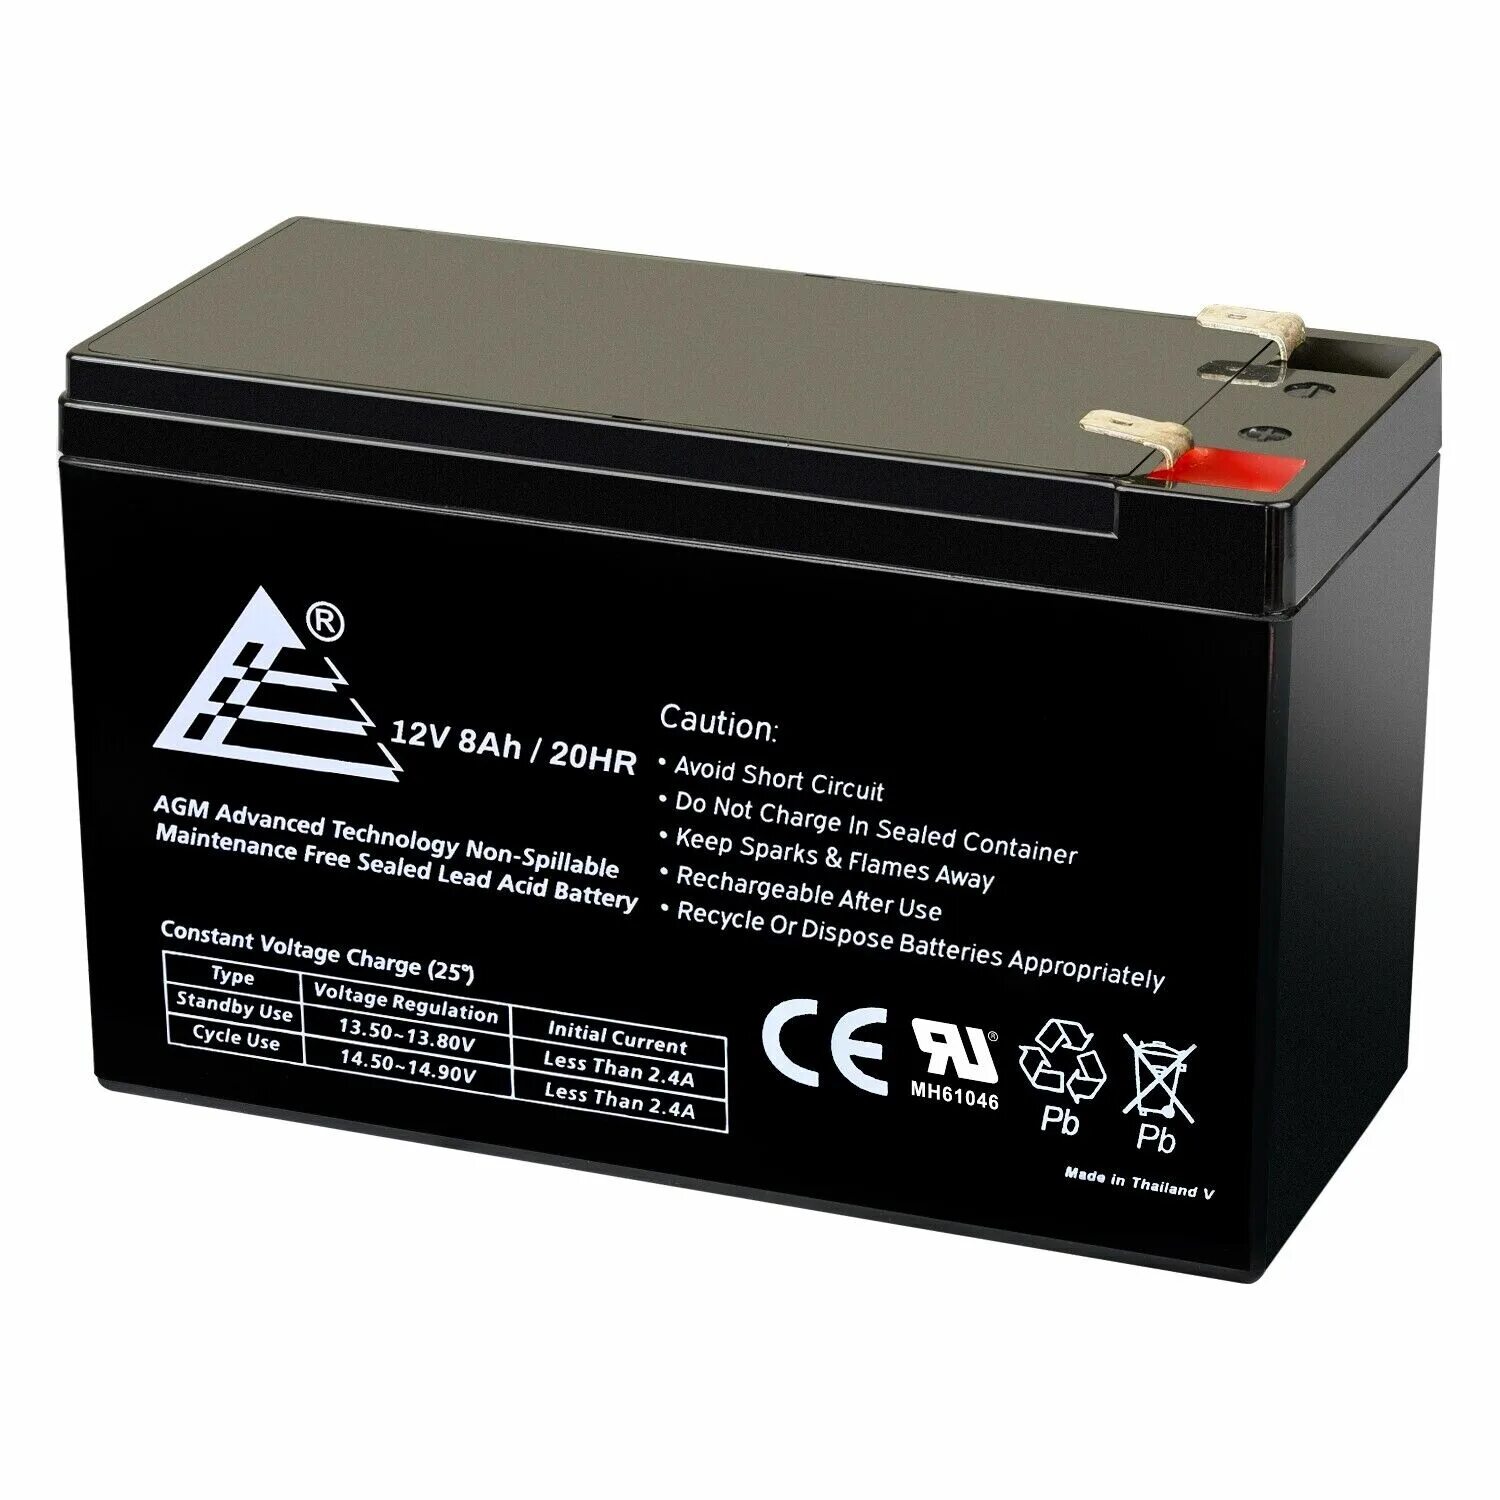 Ups 650 аккумулятор. Hermetic Gel lead-acid Battery for ups ms5-12 capacity 5ah (12v) аккумуляторные батареи для ИБП. Аккумуляторная батарея long wp7.2-12 12volt 7.2Ah. APC 650 back ups батарея. АКБ B.B. Battery sh4.5-12l (12v 4,5ah).